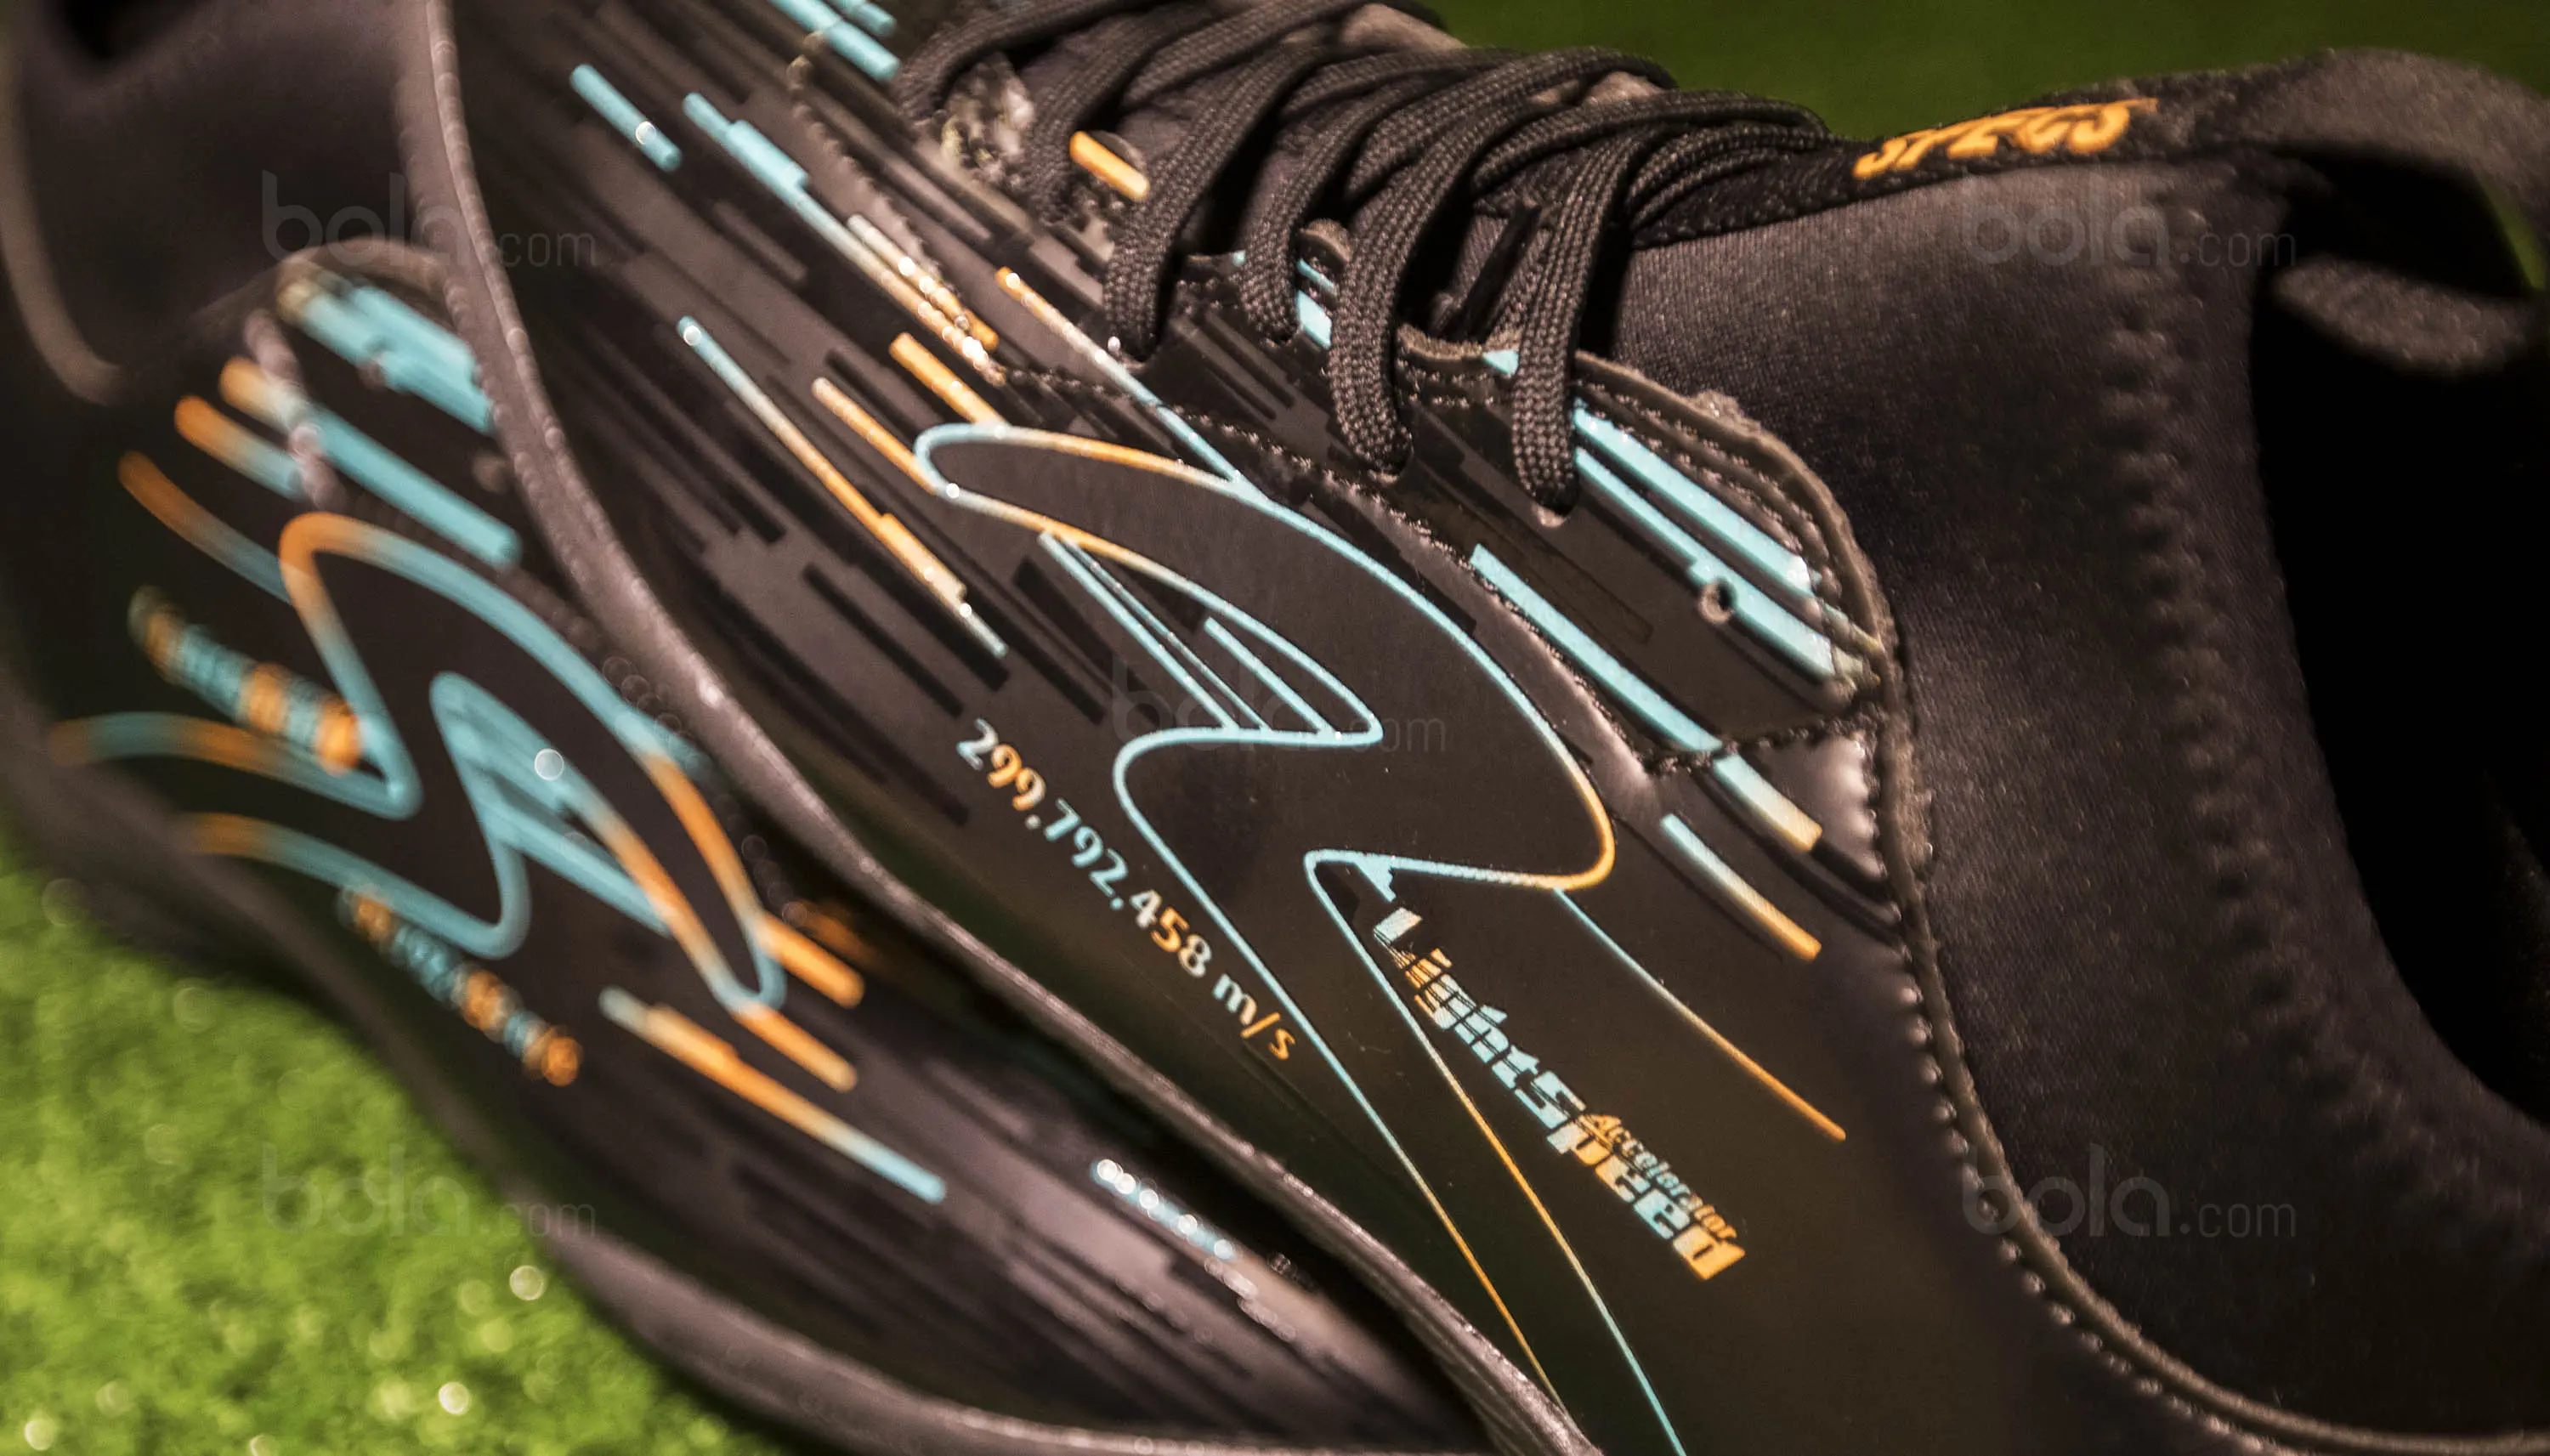 Sepatu Specs merek Accelerator Lightspeed. (Bola.com/Vitalis Yogi Trisna)